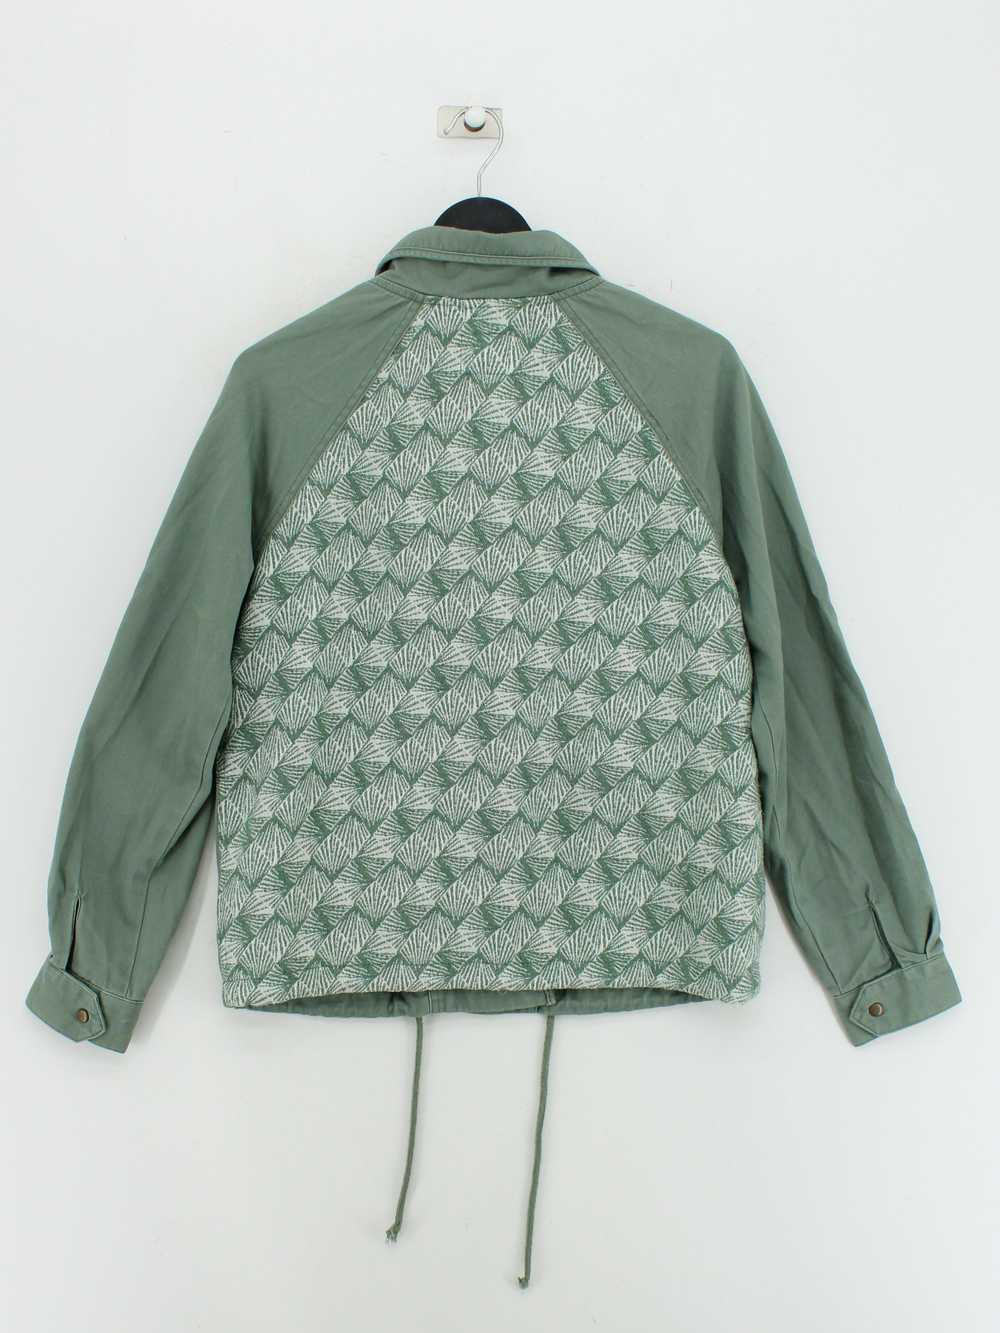 Roxy Women's Jacket S Green Cotton - image 6